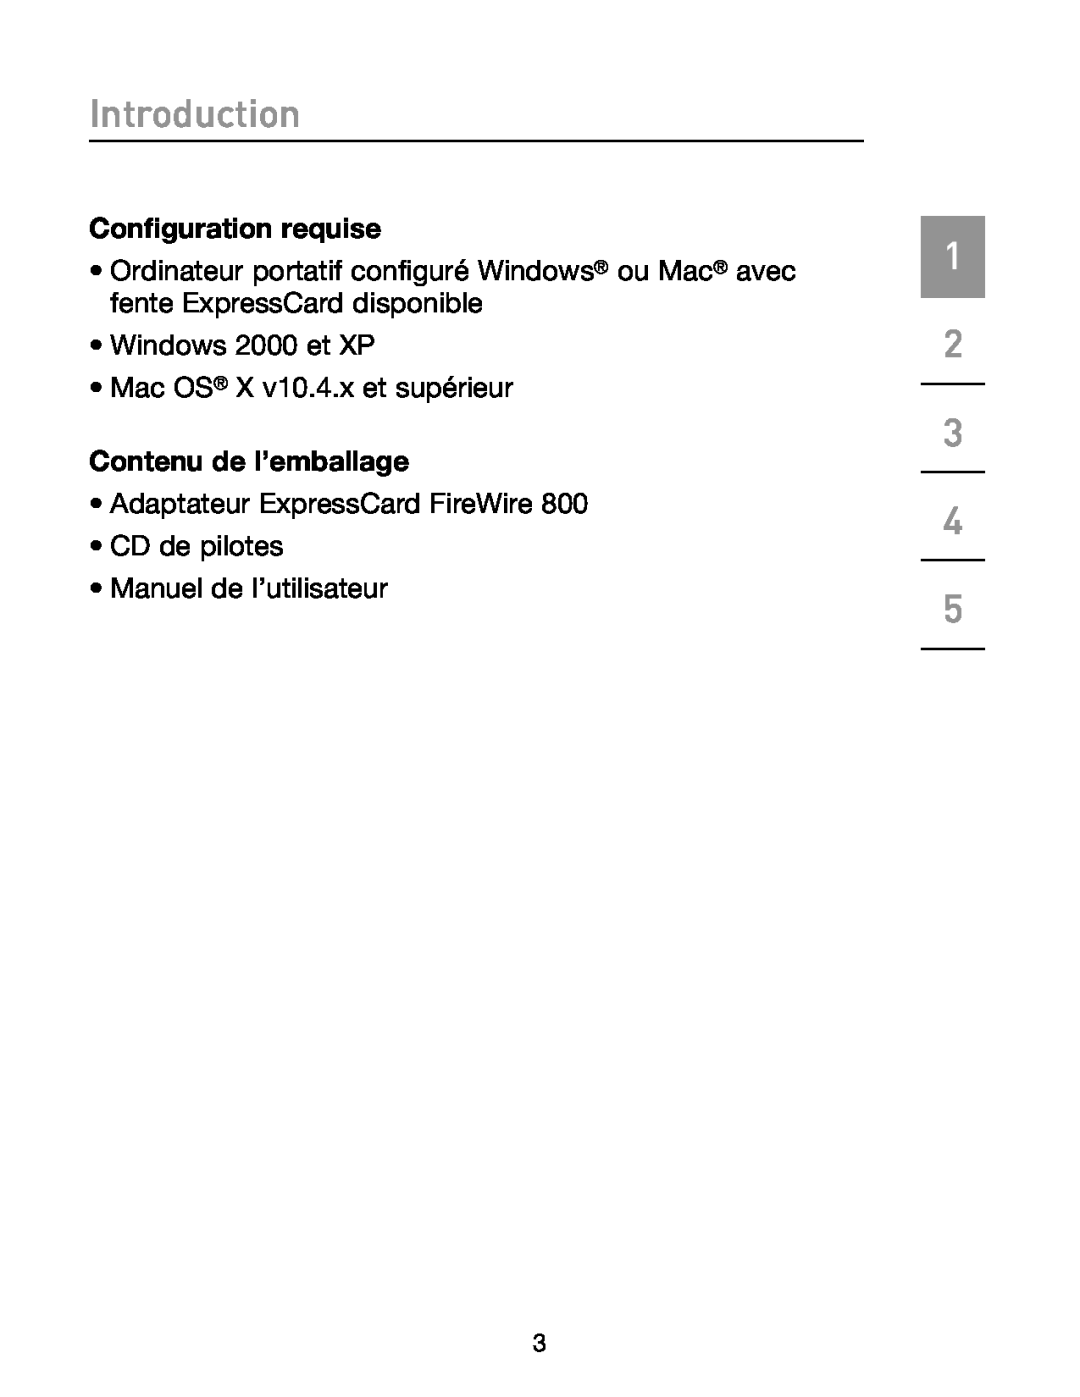 Belkin F5U514 manual Configuration requise, Contenu de l’emballage, Introduction 